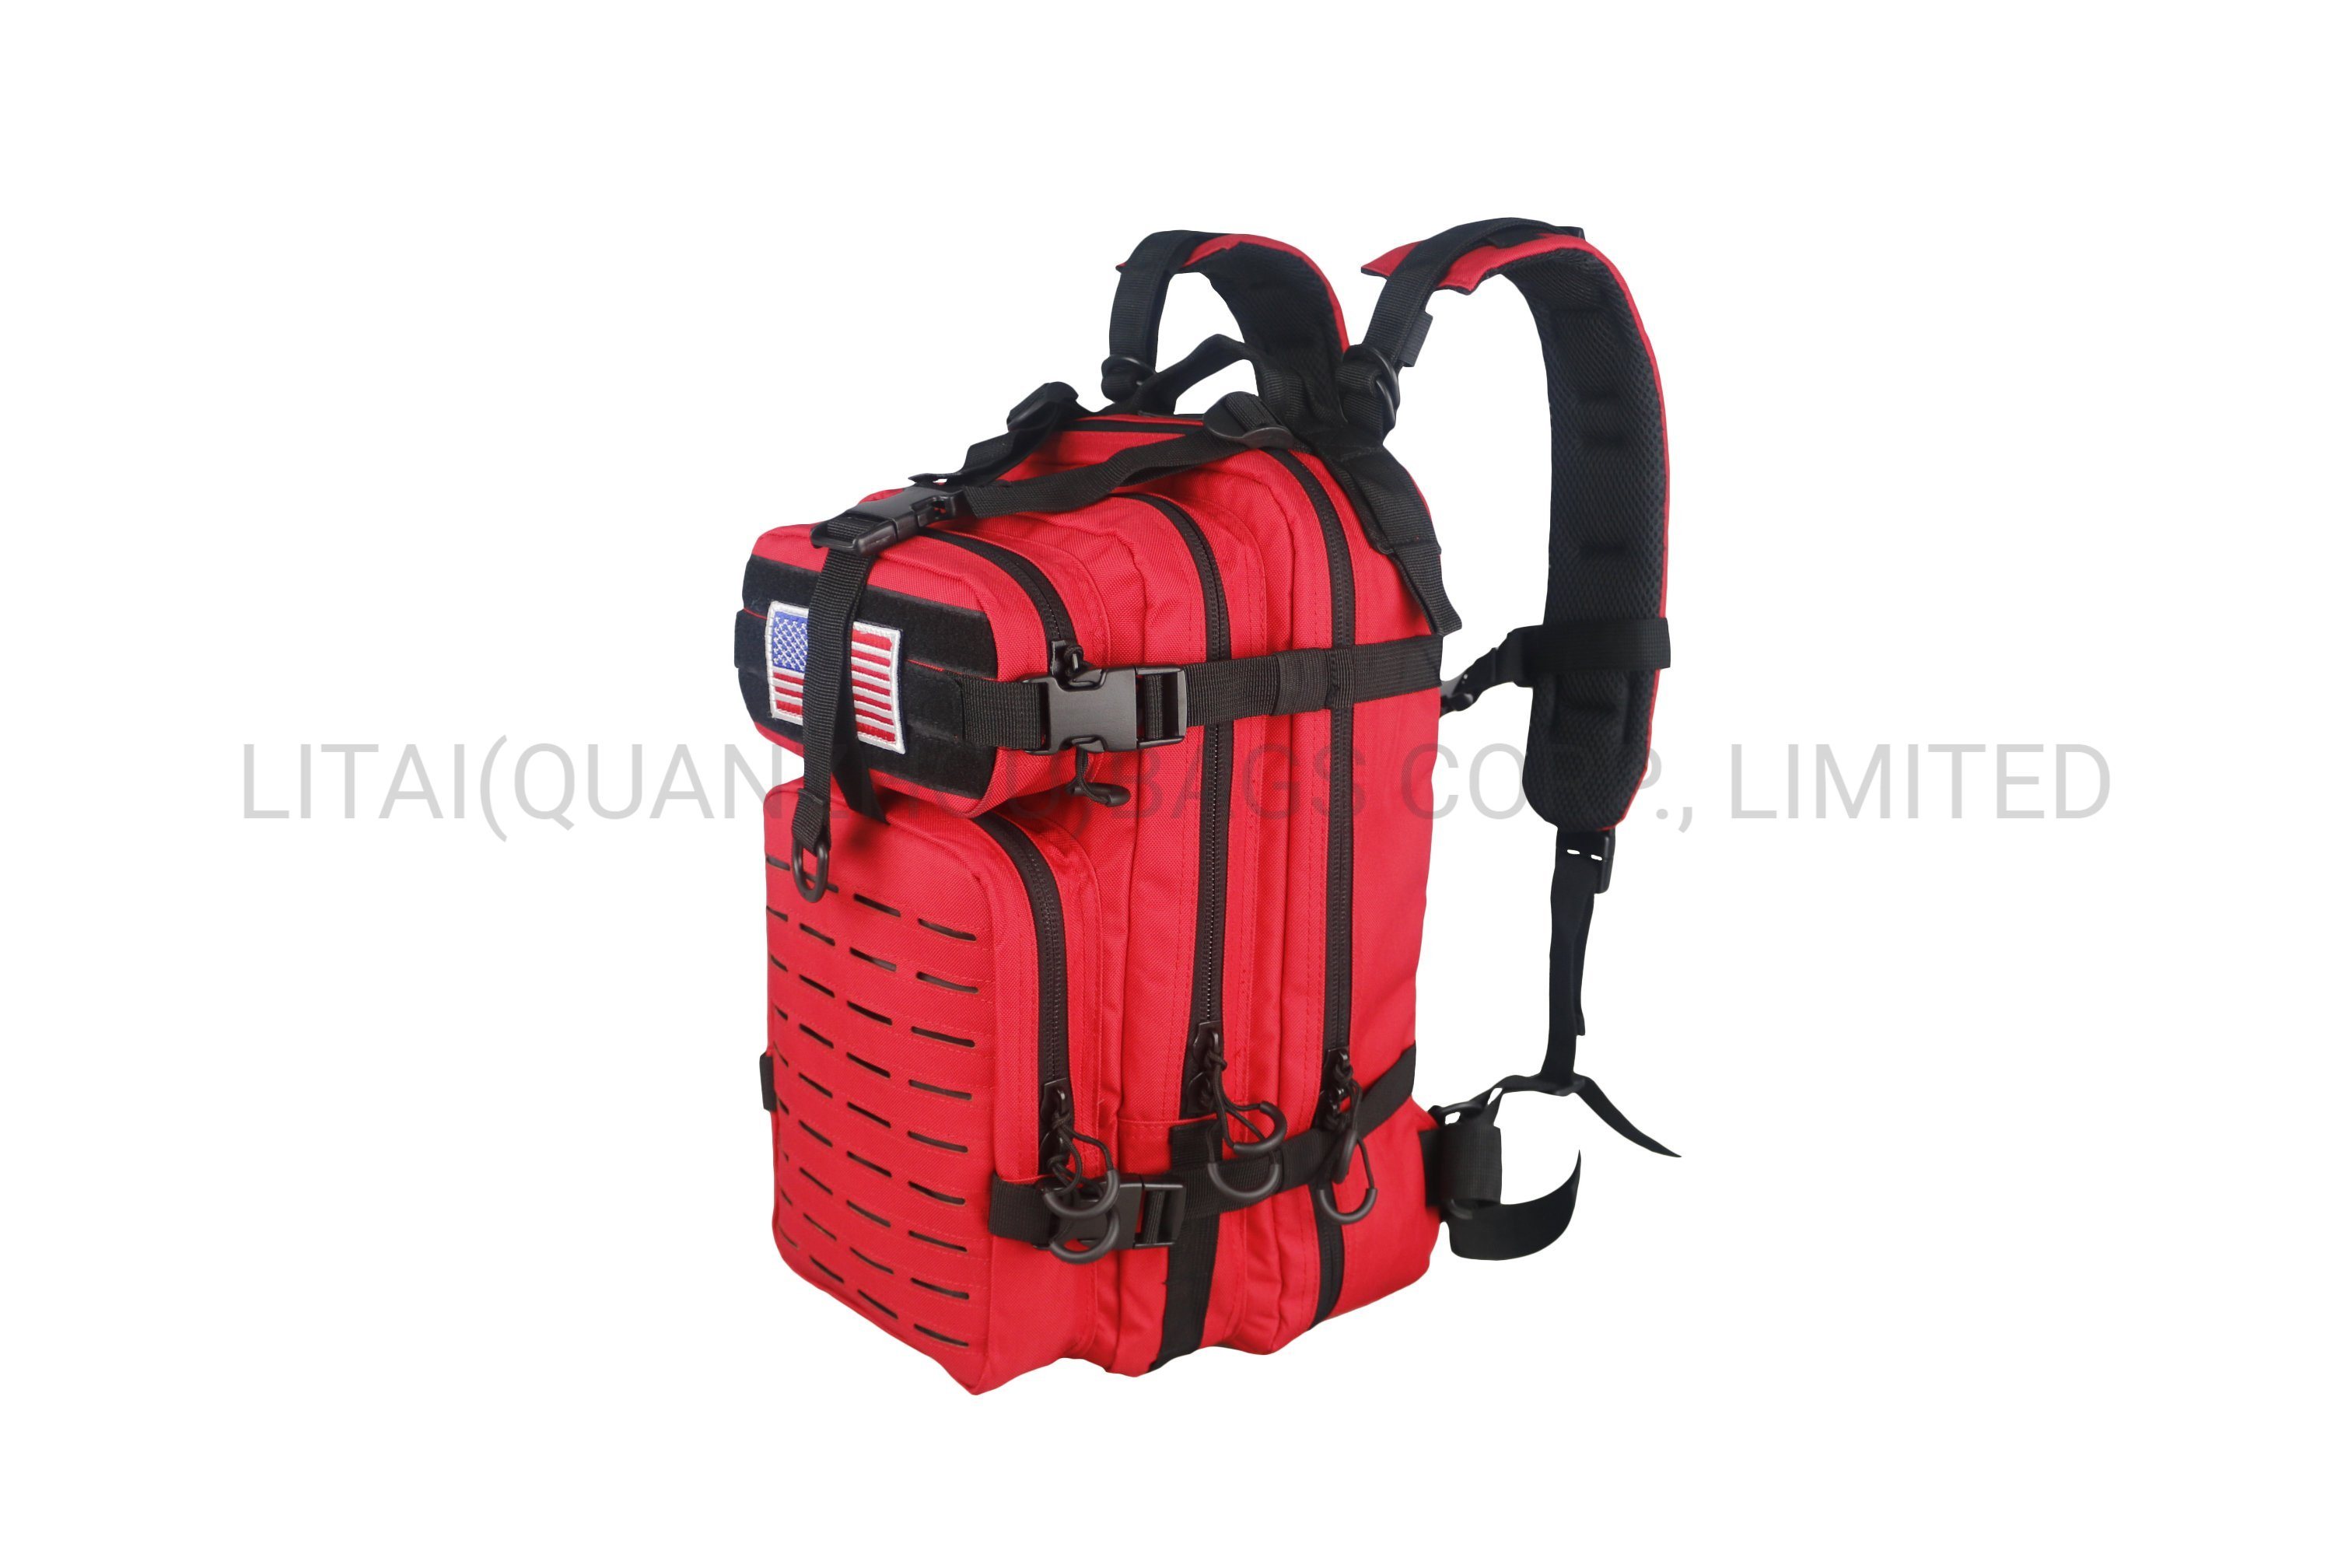 Tactical Bag Small Backpack Laser Cut Bag Red Color